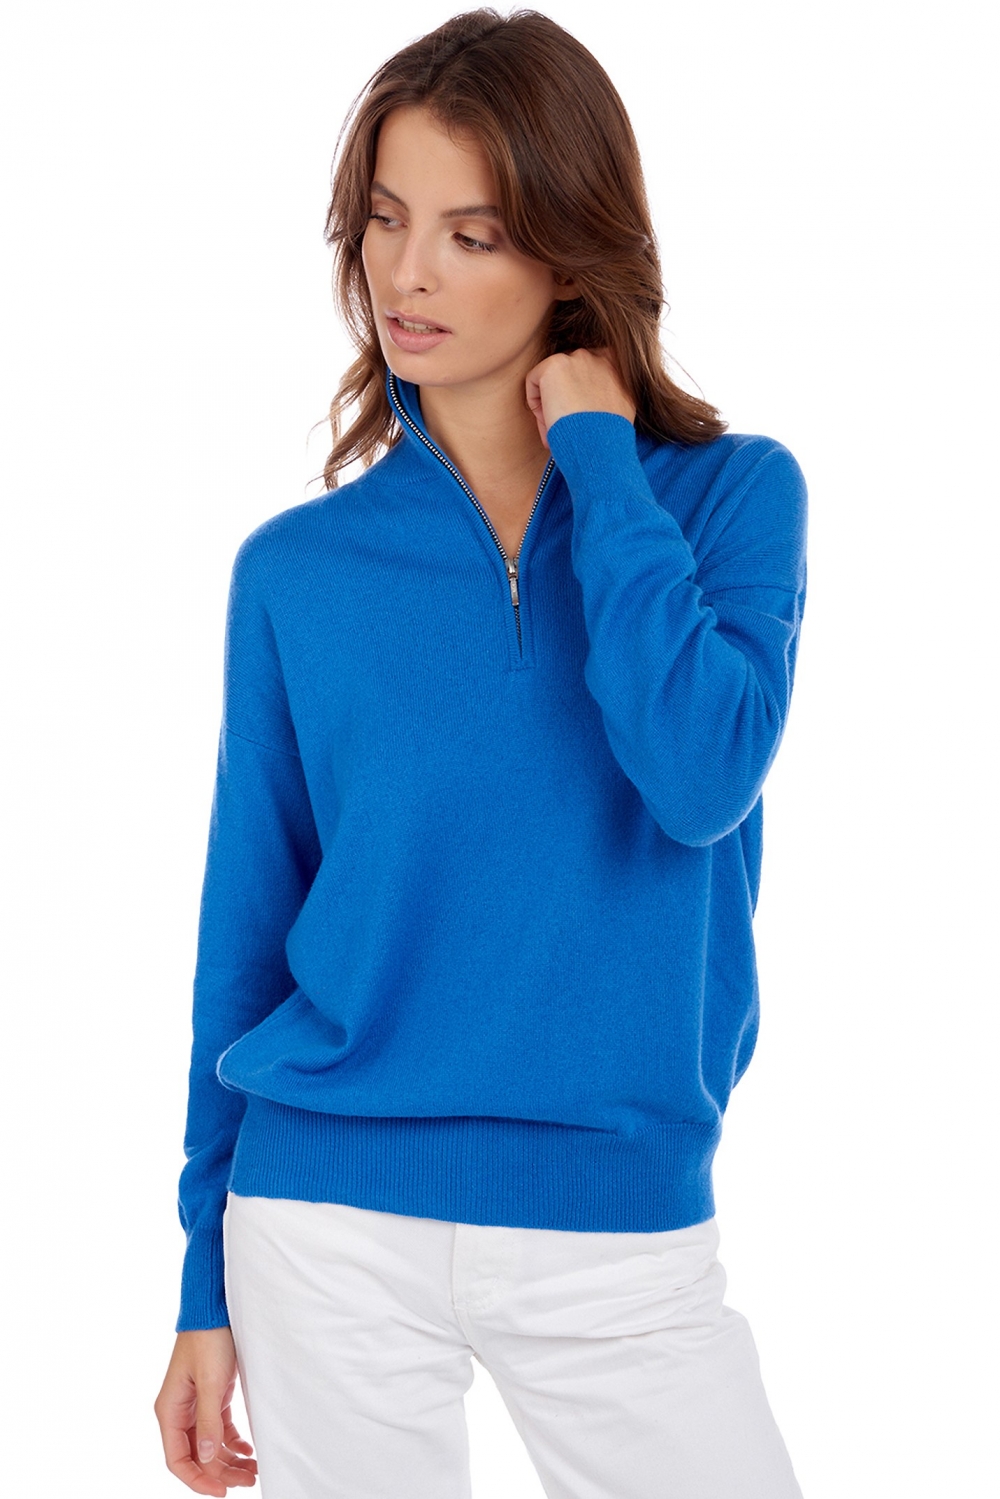 Cashmere ladies our full range of women s sweaters groseille tetbury blue s